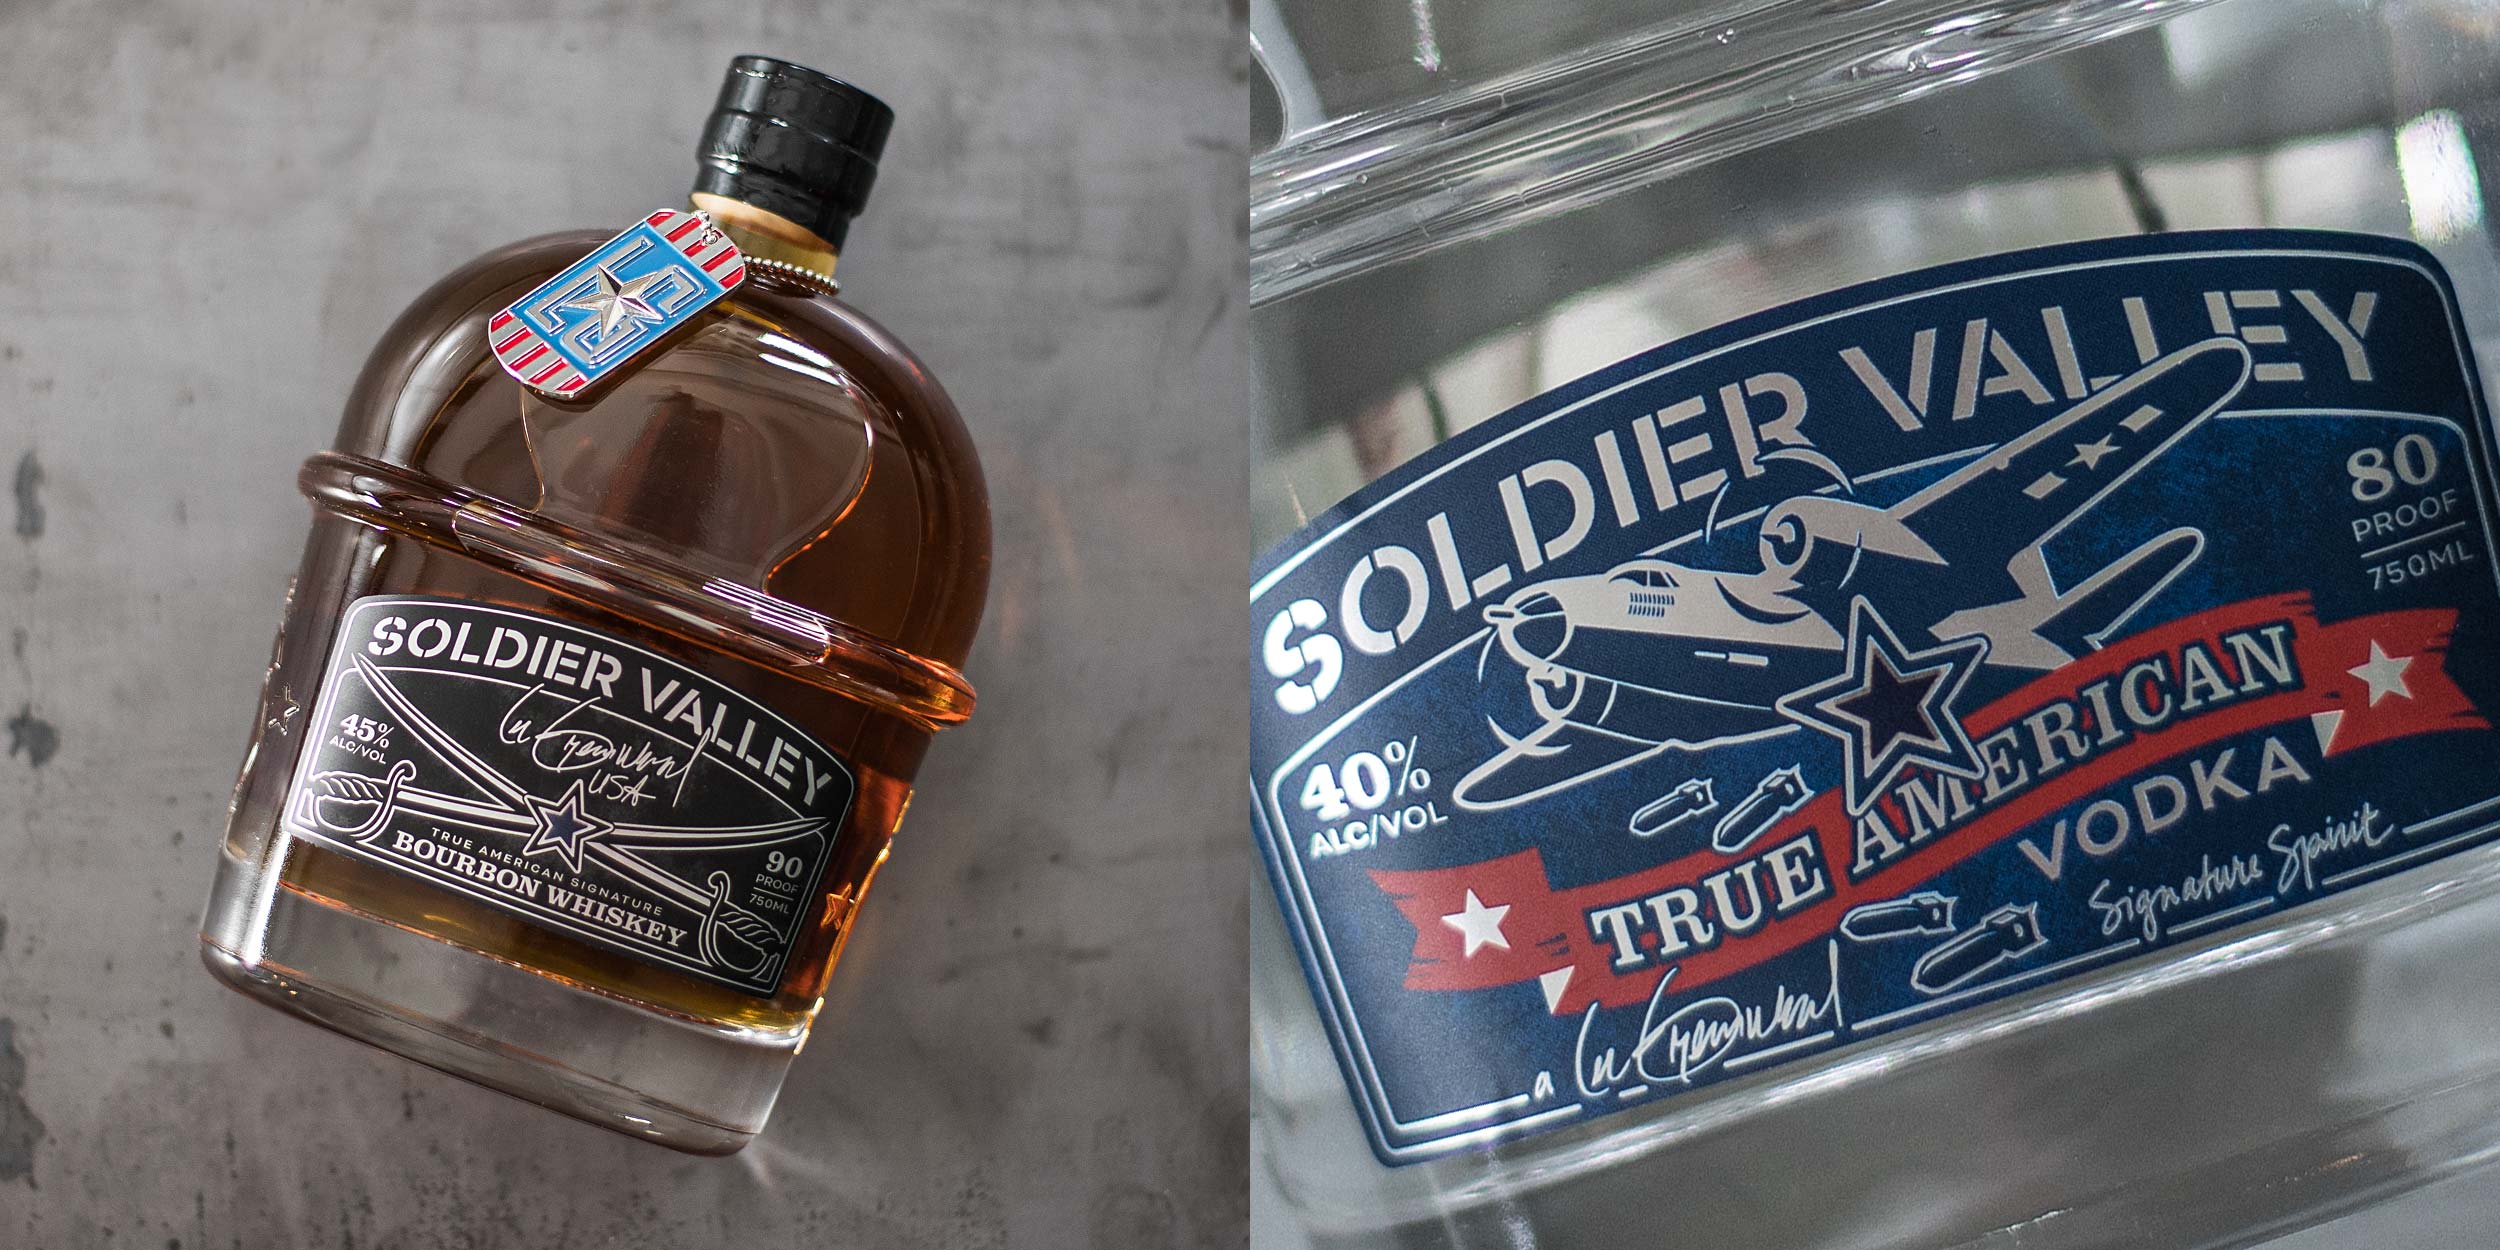 Soldier Valley Bourbon Whiskey